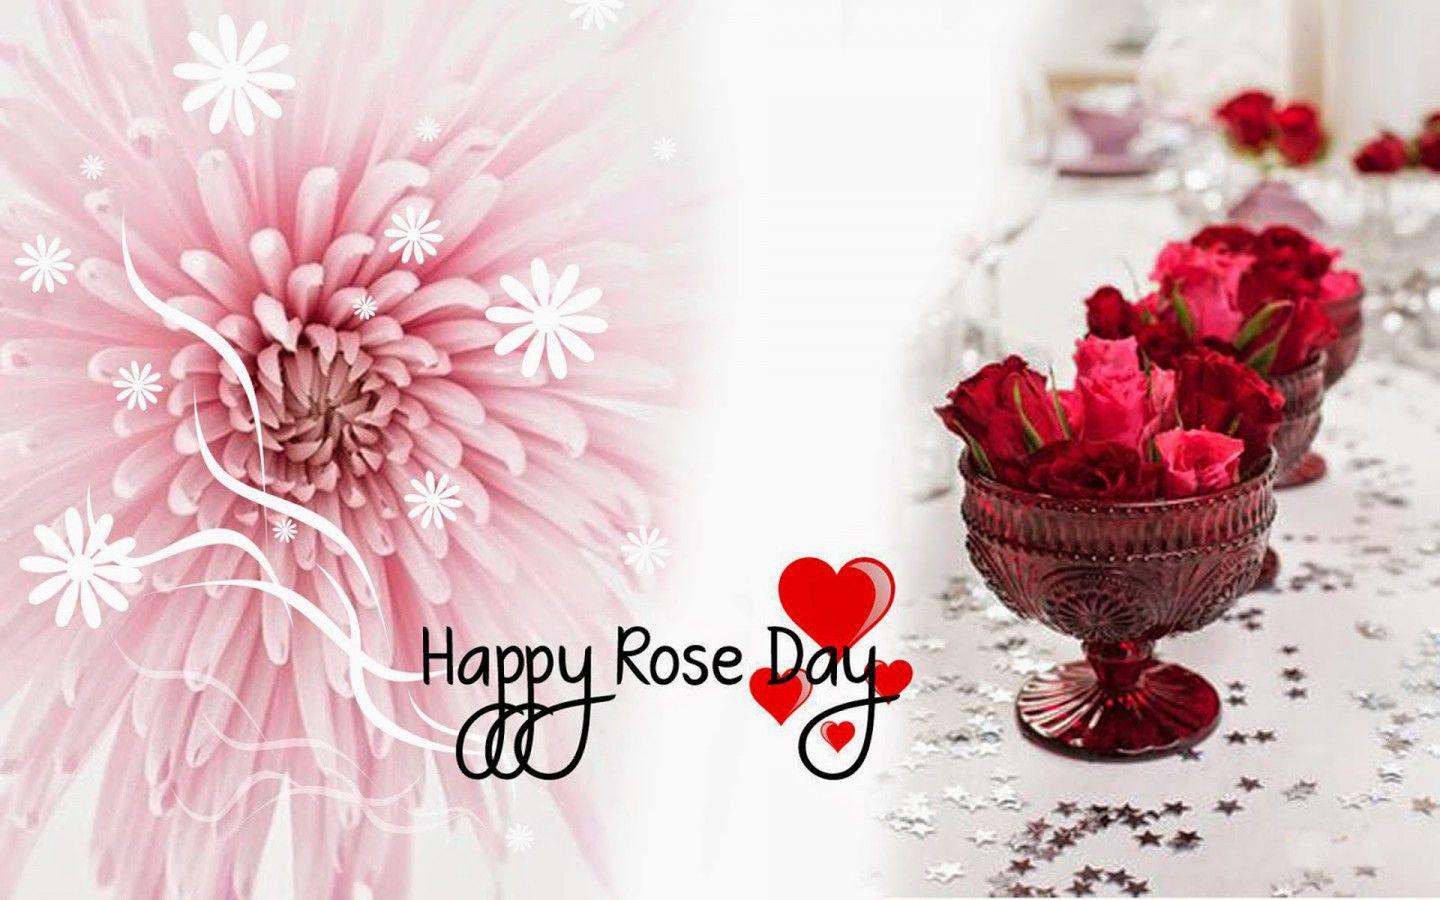 Happy Rose Day 2018 Image Whatsapp Dp Wallpapers 7th Feb Pics FB